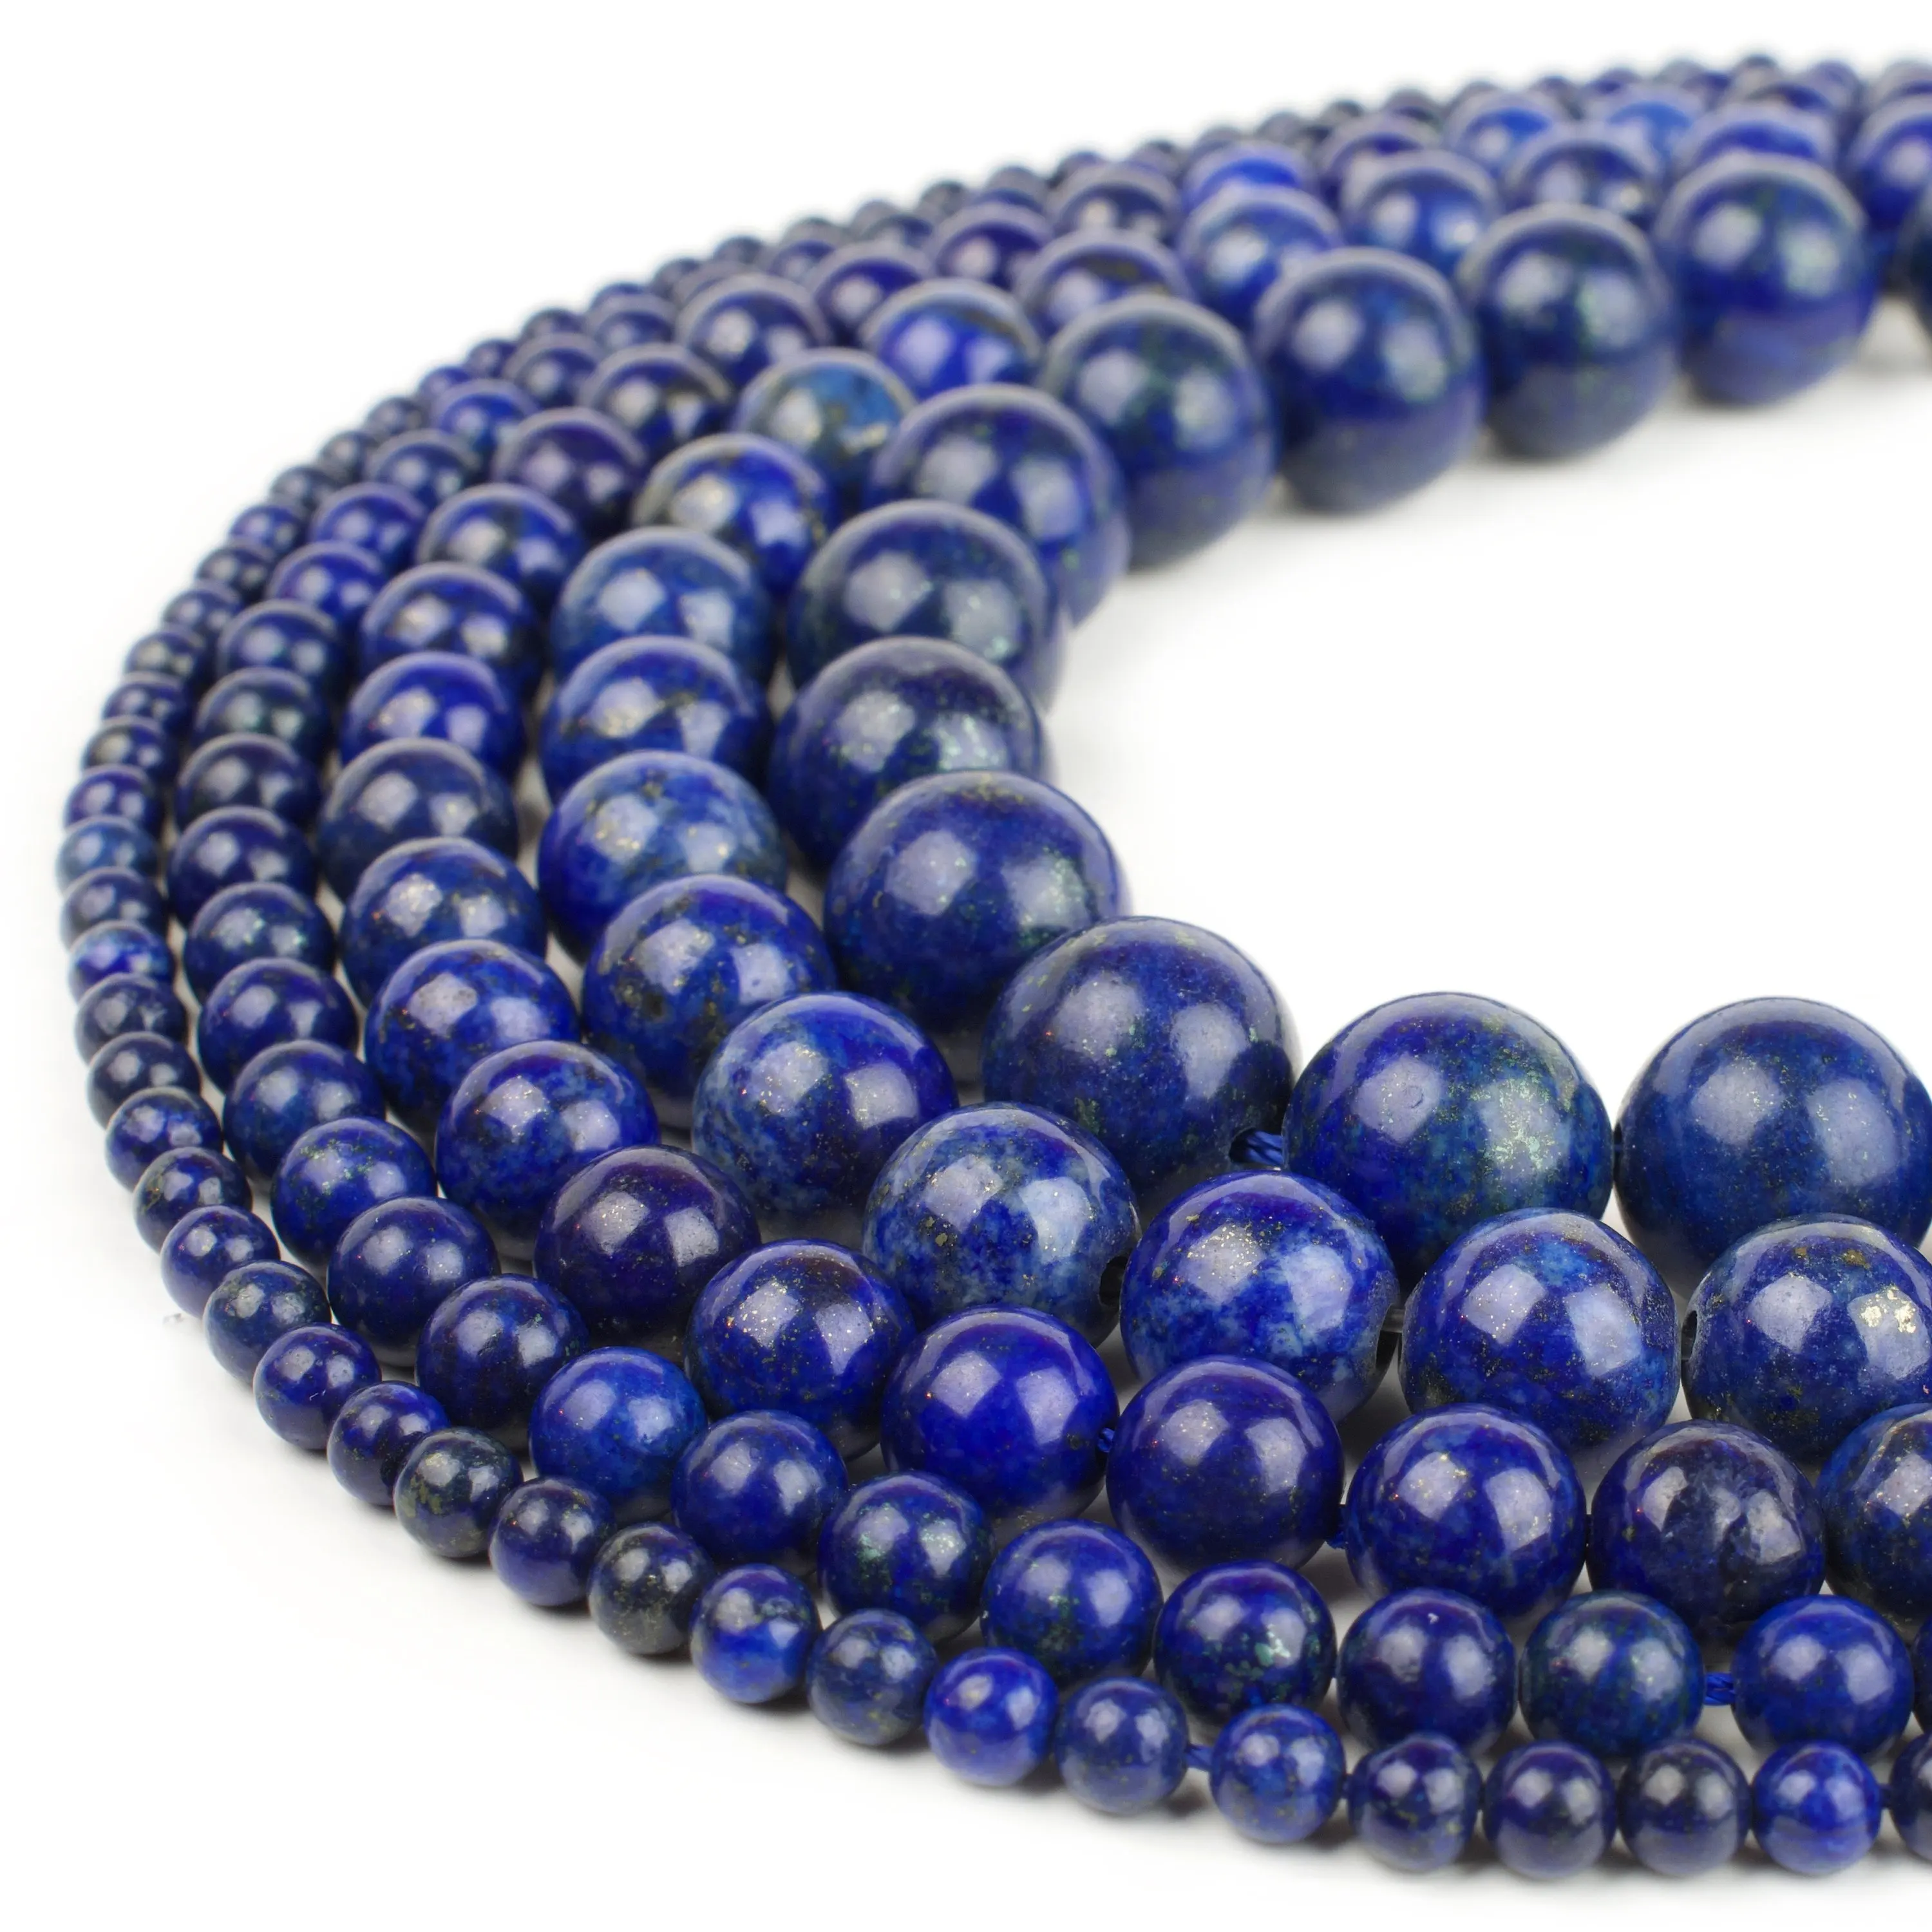 GEM-Inside 8mm Dyed Lapis Lazuli Round Gemstone Semi Precious Loose Beads for Jewellery Making 15''